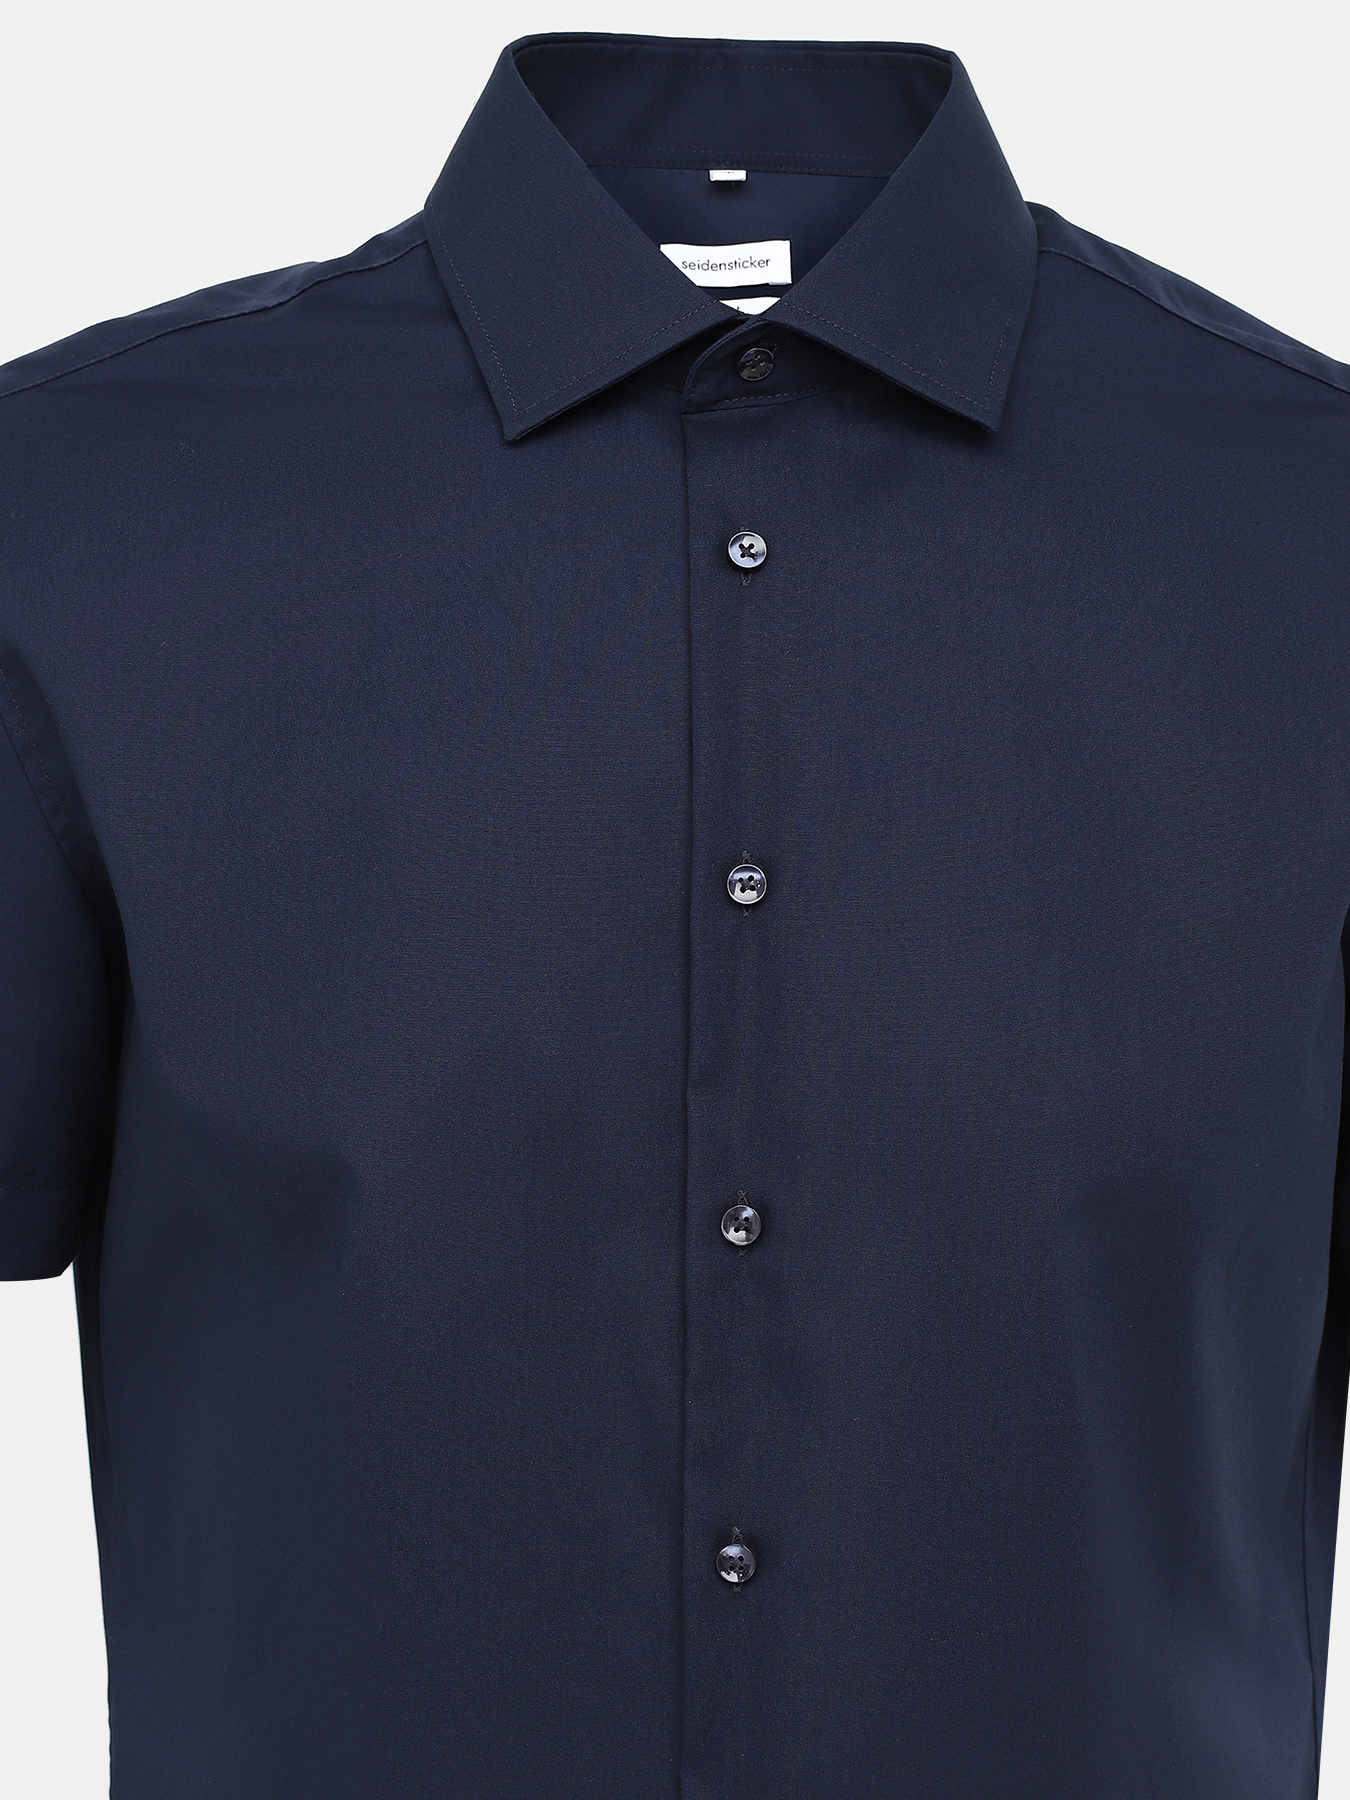 Рубашка Seidensticker 408005-022, цвет темно-синий, размер 54 - фото 3